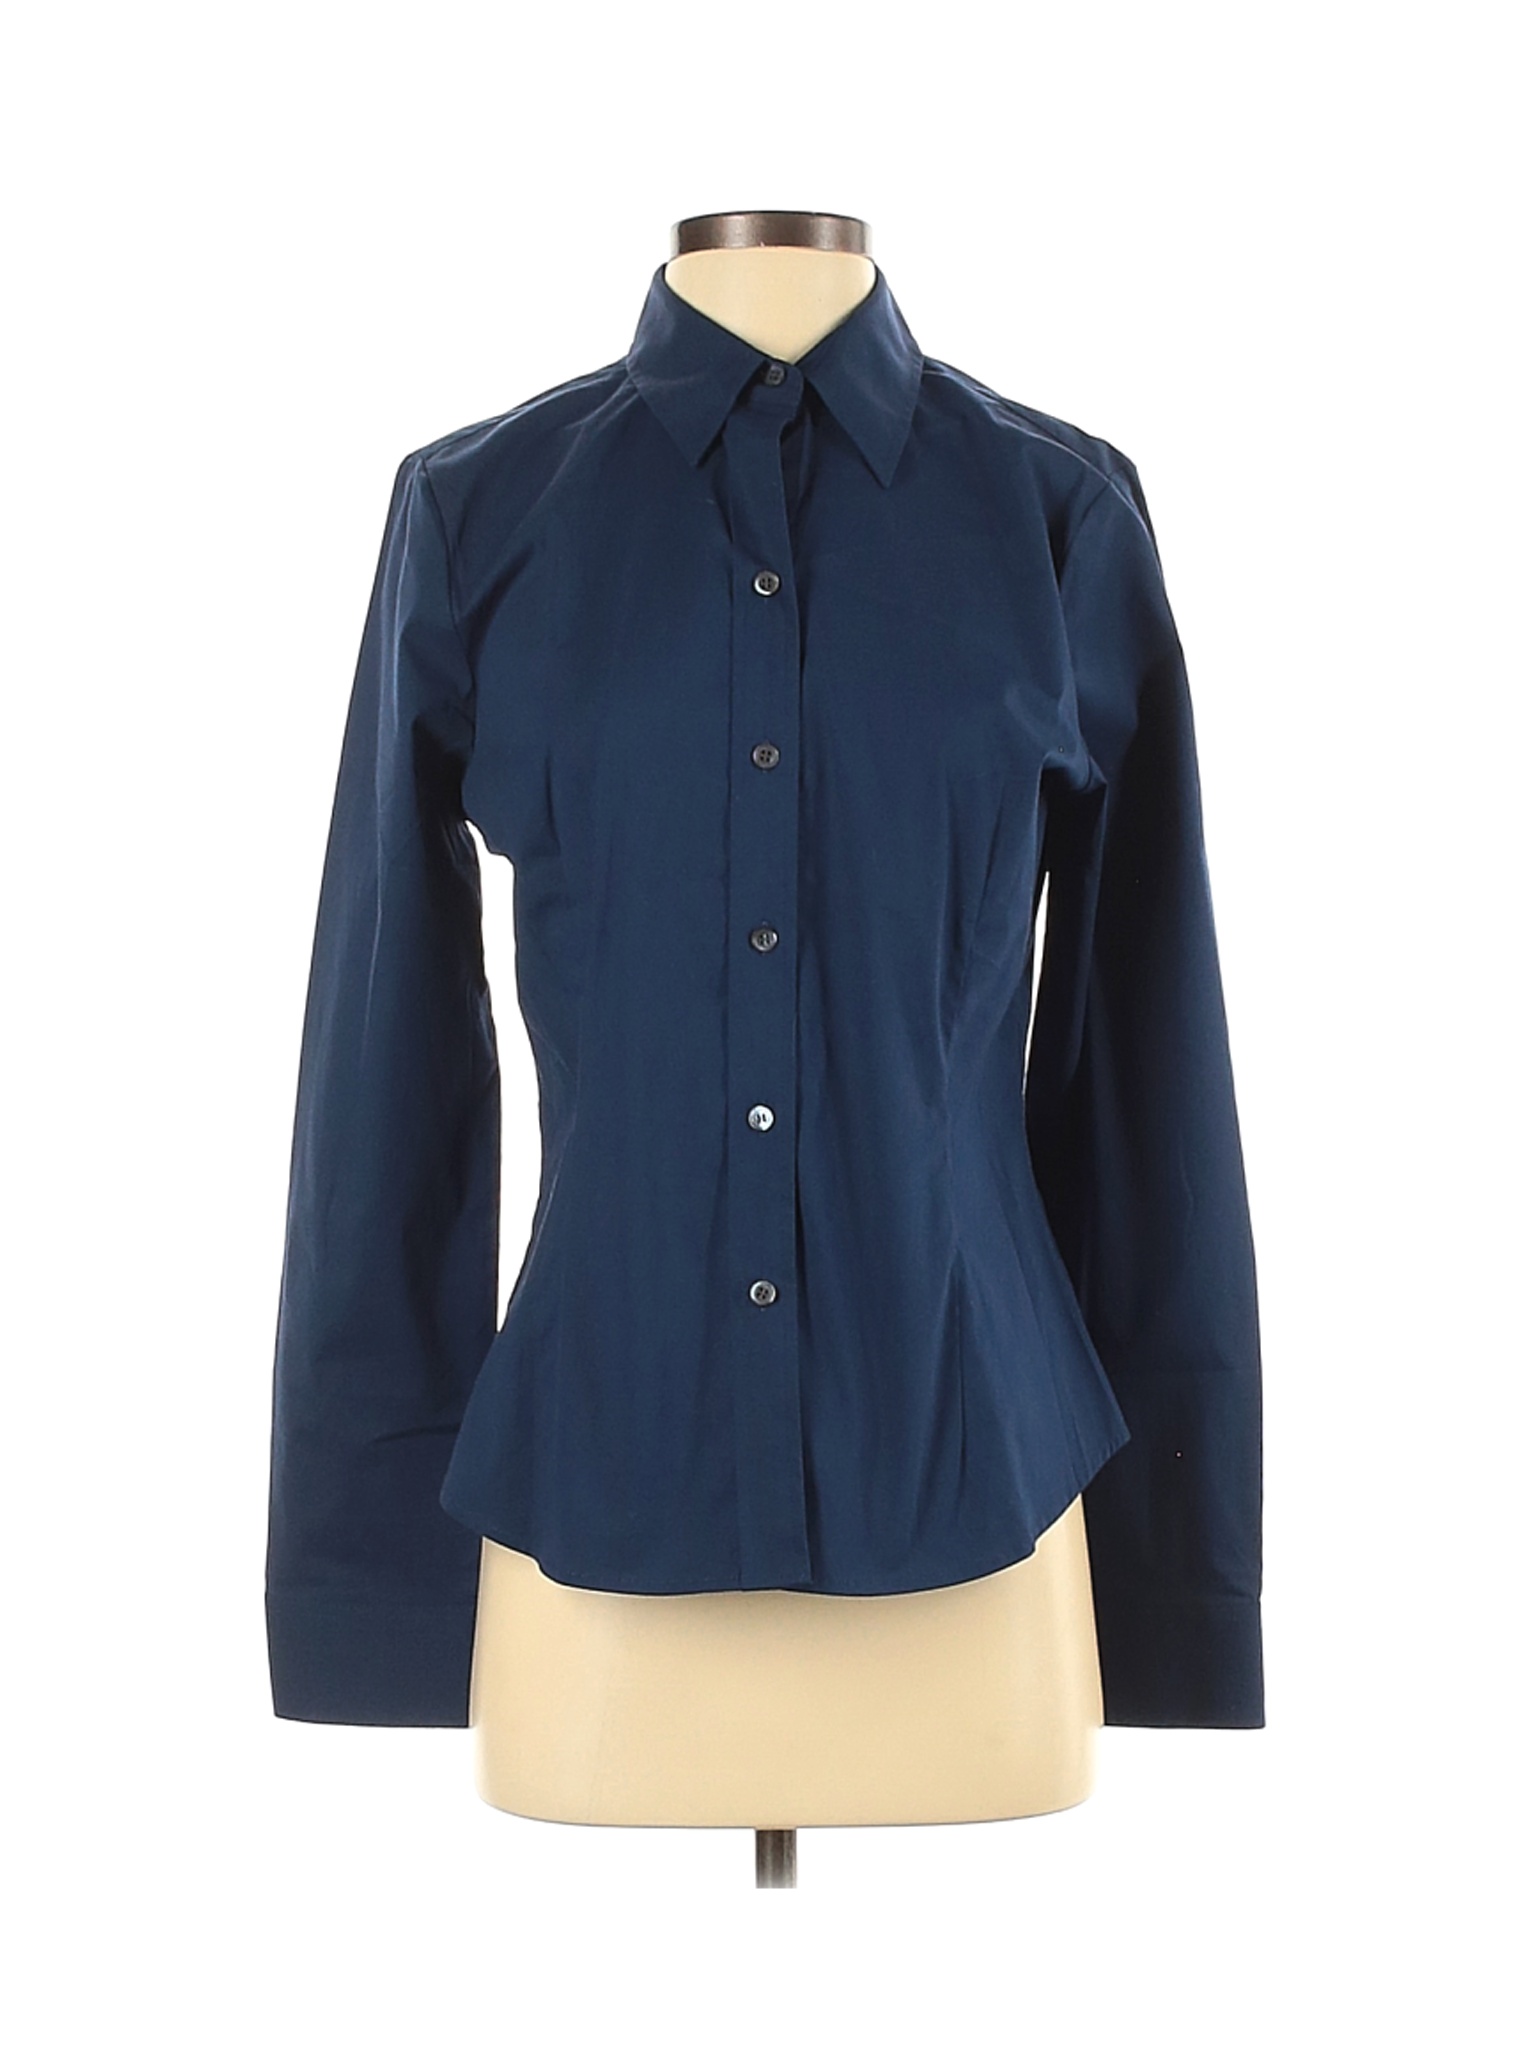 NWT The Limited Women Blue Long Sleeve Button-Down Shirt M | eBay